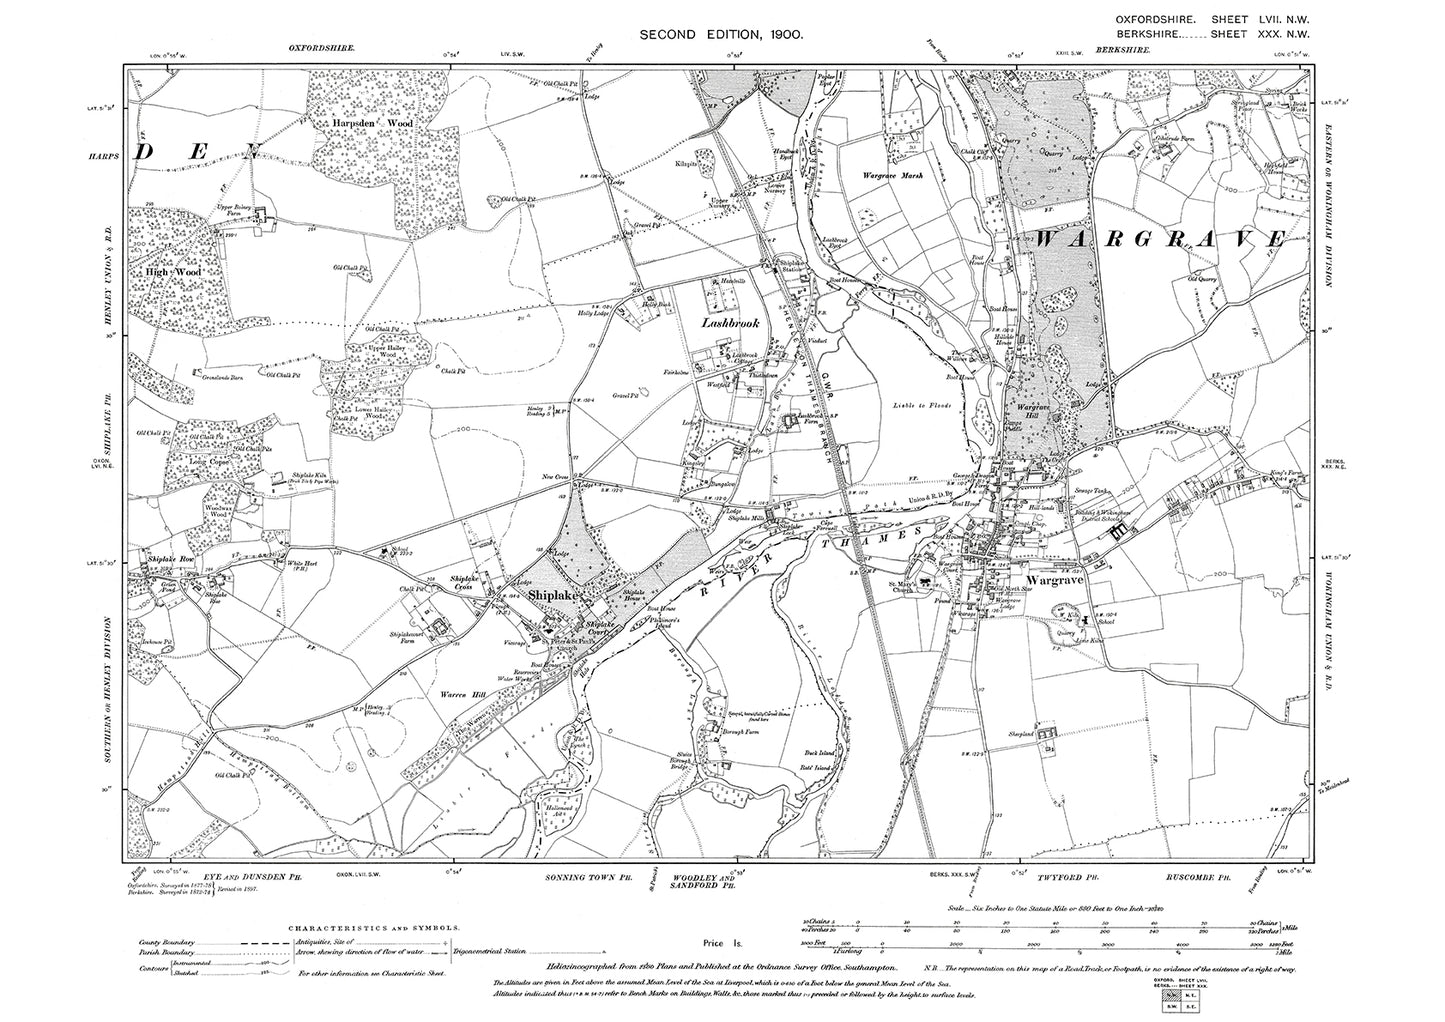 Shiplake, Lashbrook, Oxfordshire in 1900: 57NW